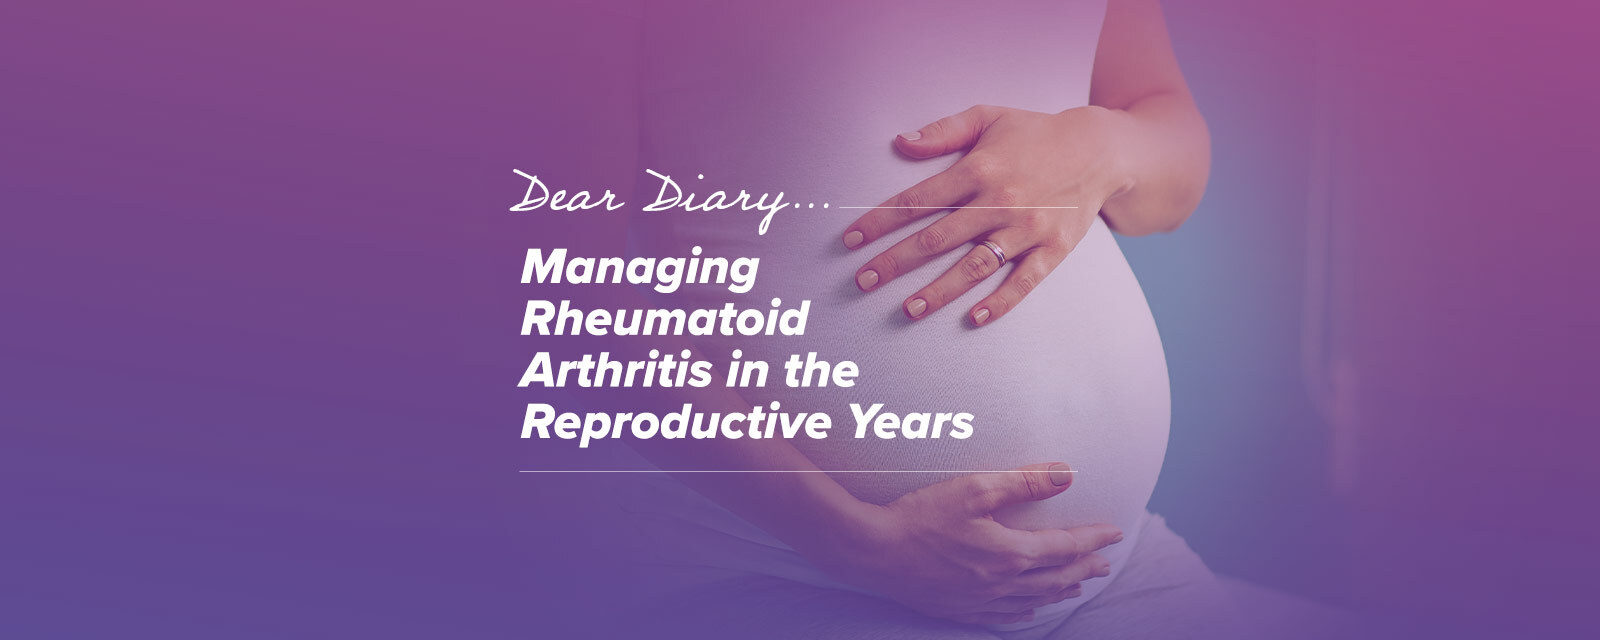 Managing Rheumatoid Arthritis in the Reproductive Years